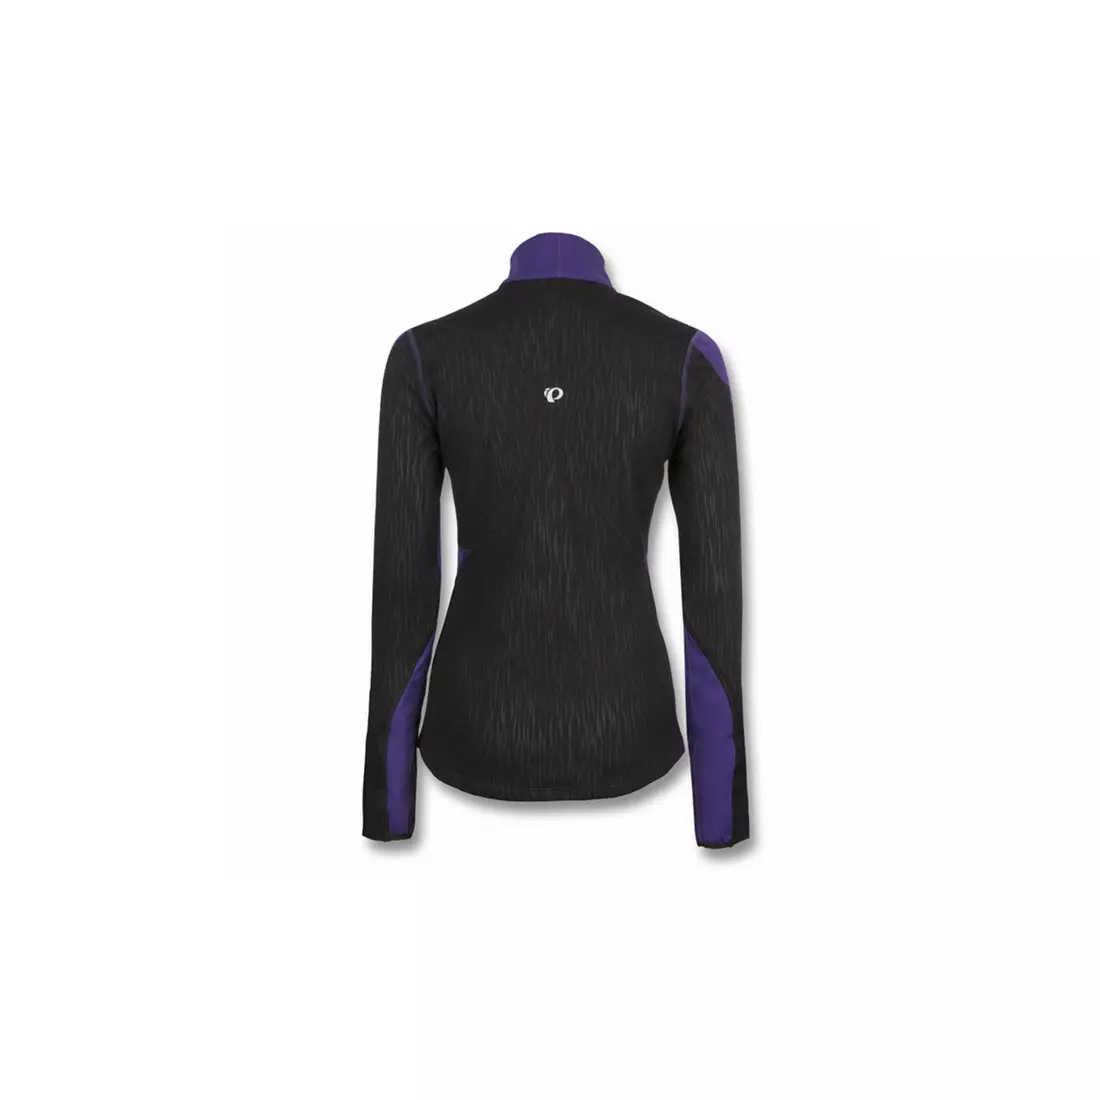 PEARL IZUMI Fly Thermal 12221404-3ZW - women's running sweatshirt, color: purple